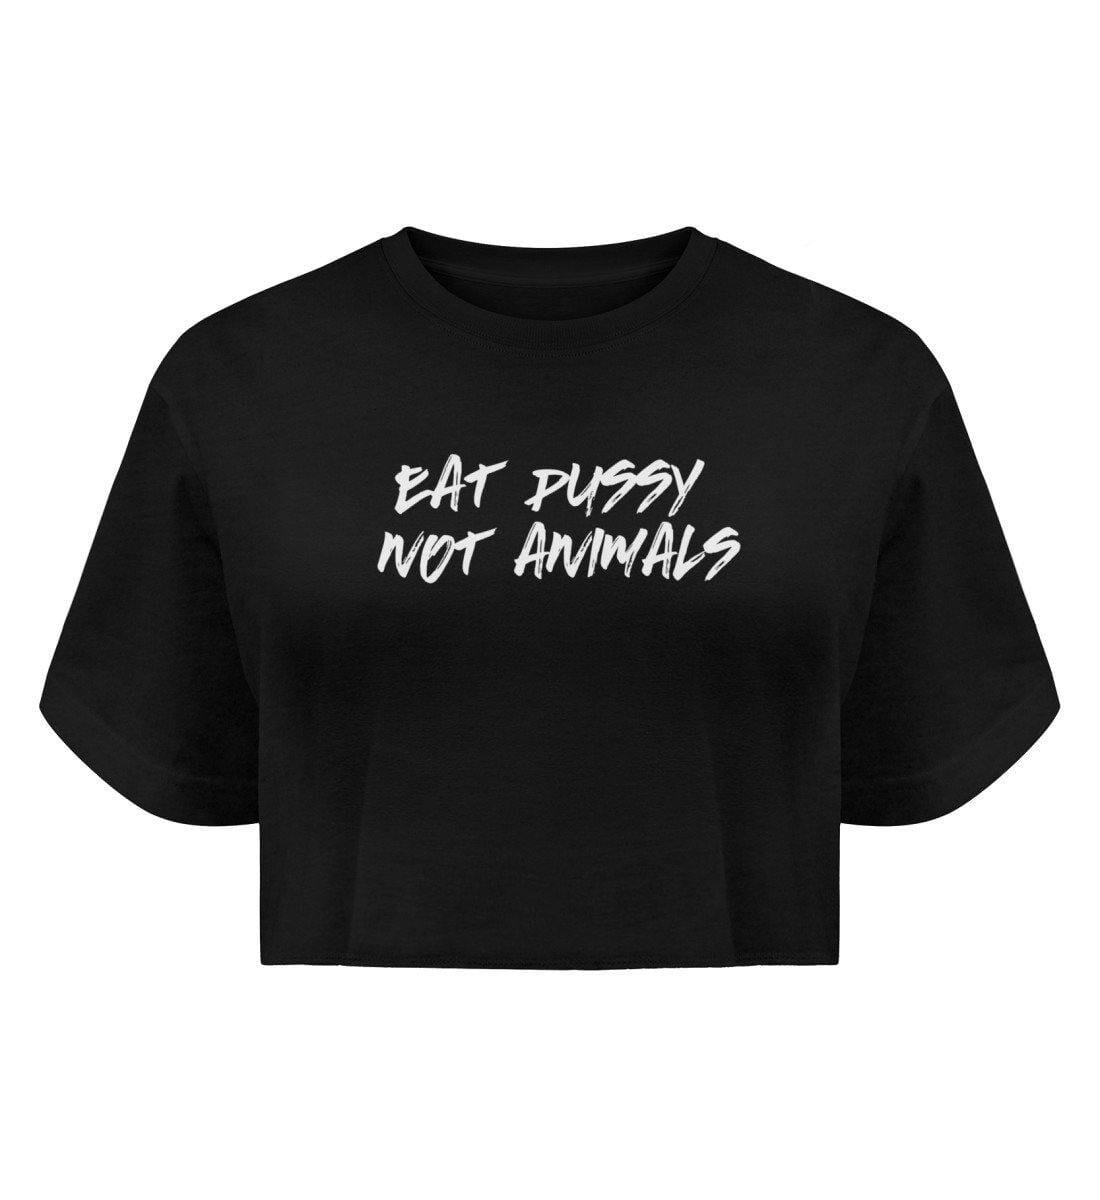 Eat pussy not animals - Boyfriend Organic Crop Top Boyfriend Organic Crop Top Shirtee Schwarz S 